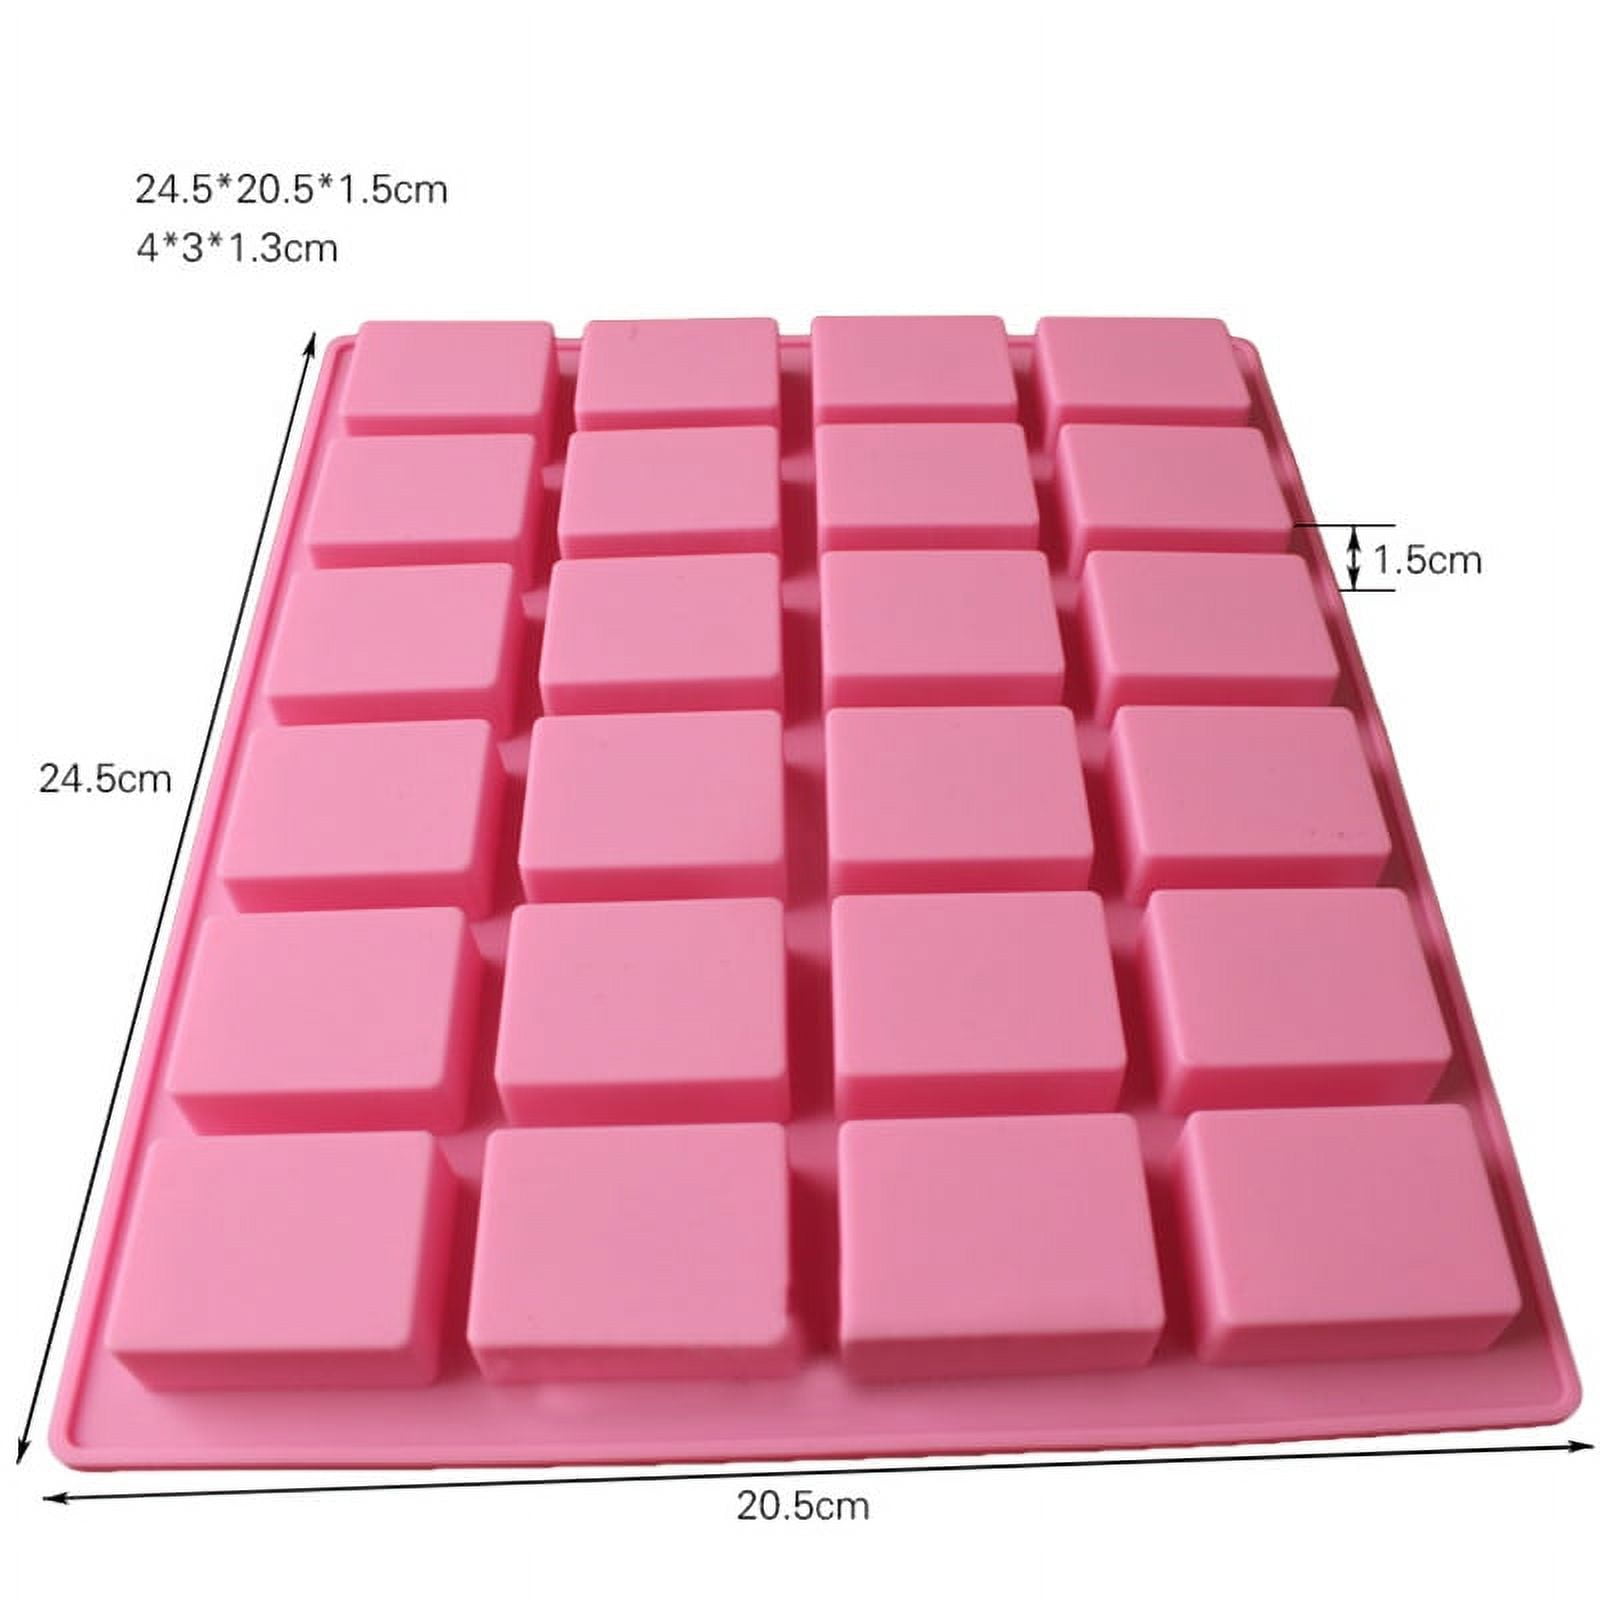 Size 36.2*29.2*8.4 cm Silicone Soap Mold Slab Mould Silicone Tray